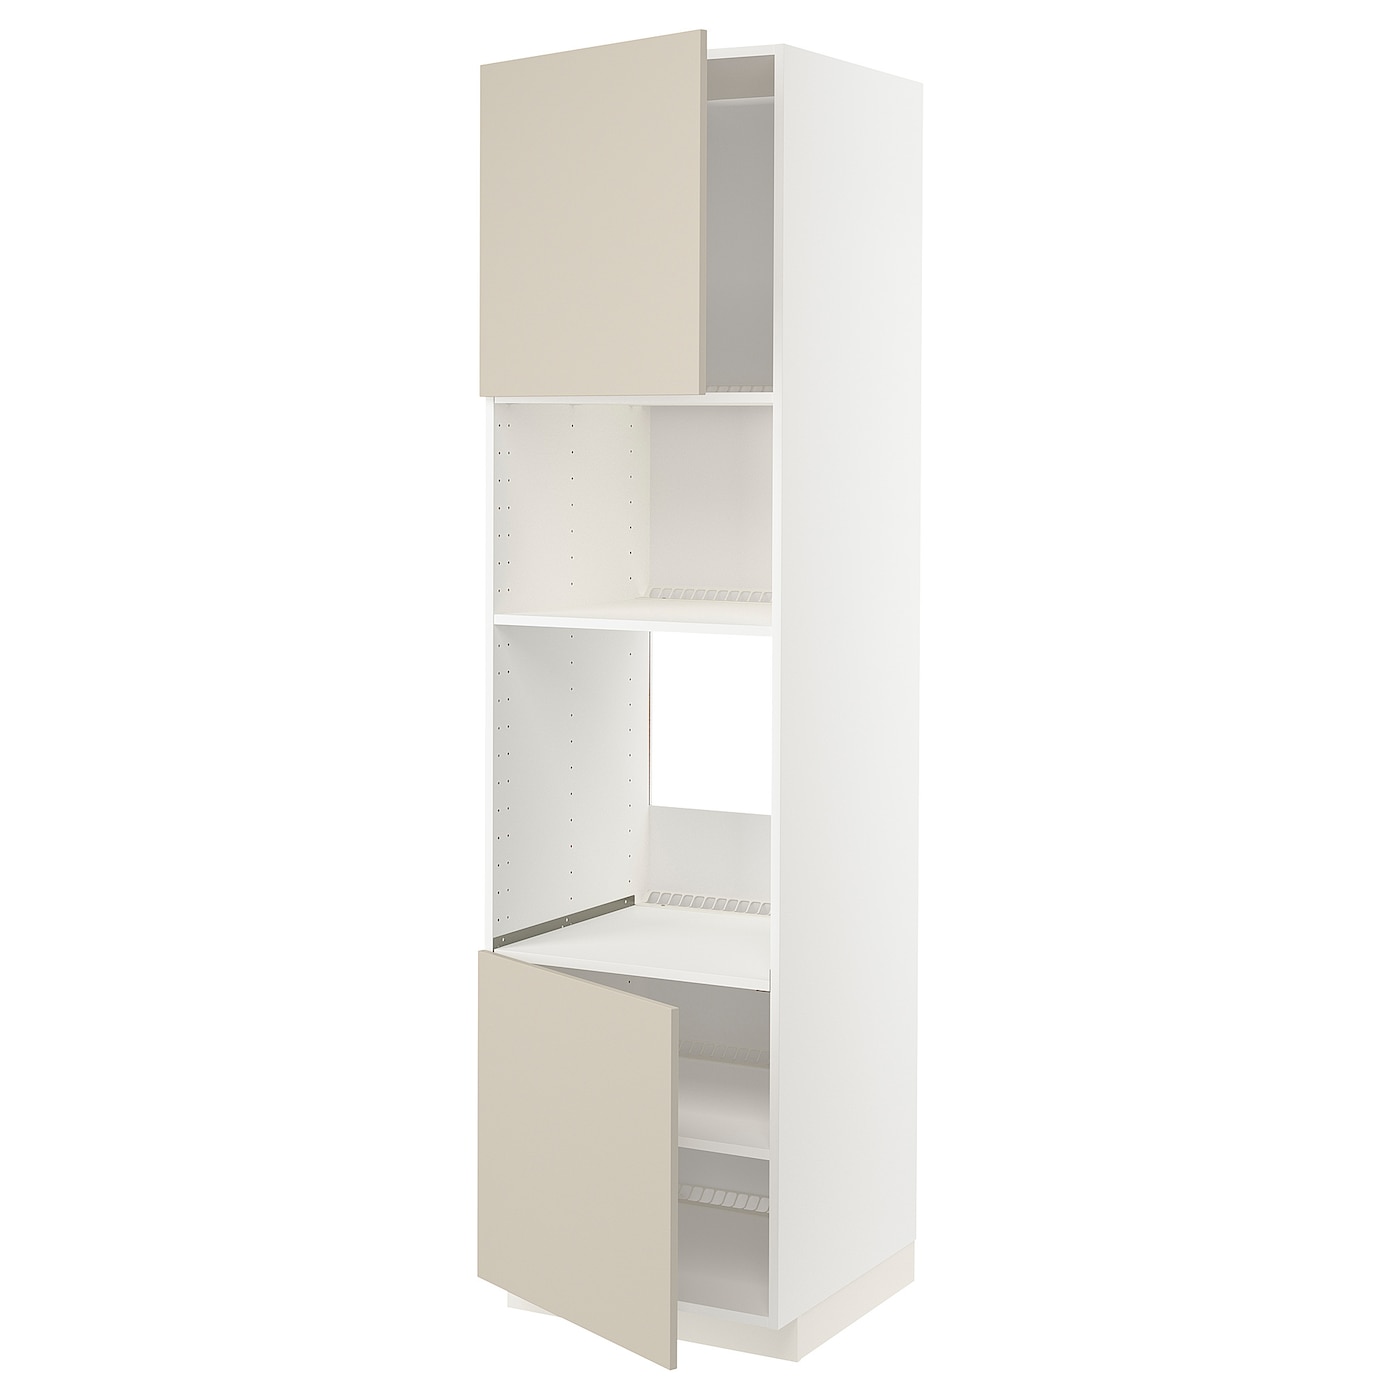 Кухонный шаф-пенал - METOD IKEA/ МЕТОД ИКЕА, 228х60 см, белый/бежевый